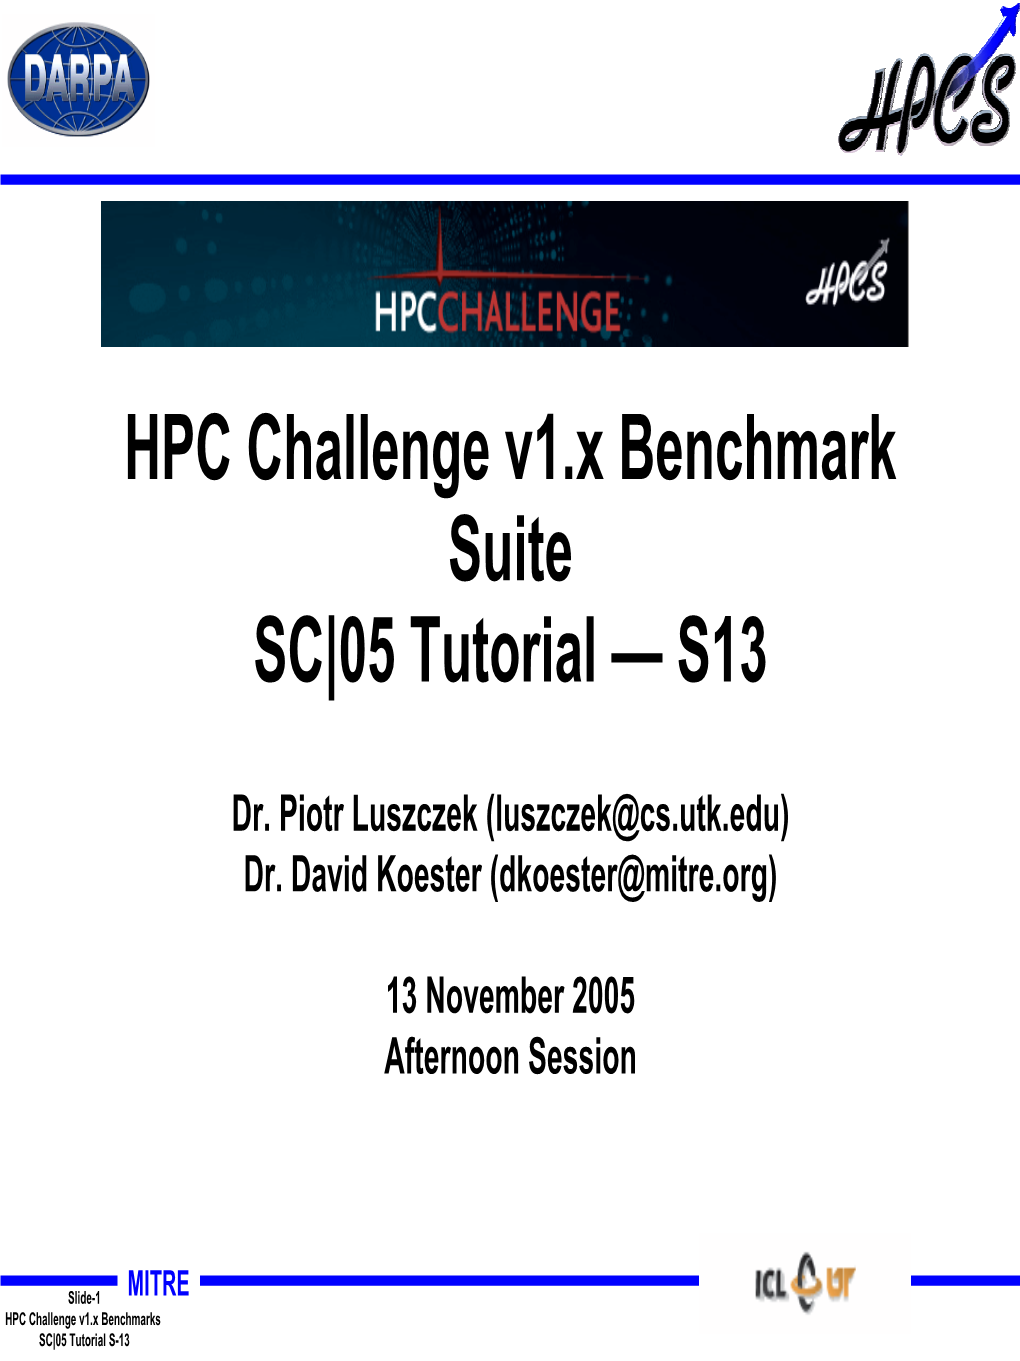 HPC Challenge V1.X Benchmark Suite SC|05 Tutorial — S13